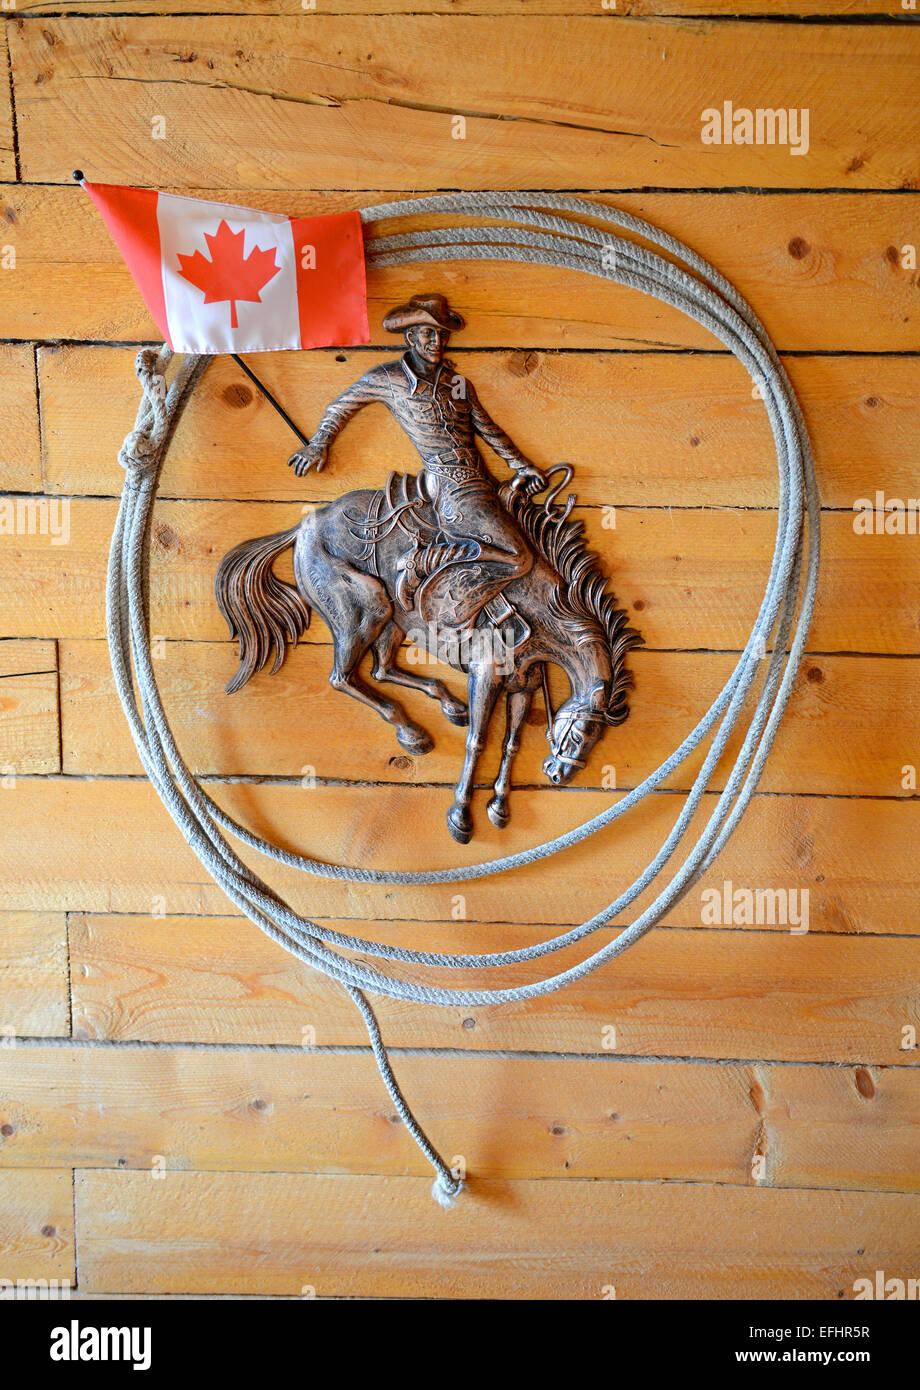 Cowboy lasso, lariat, Canada flag at La Reata Ranch, Saskatchewan, Canada. Stock Photo